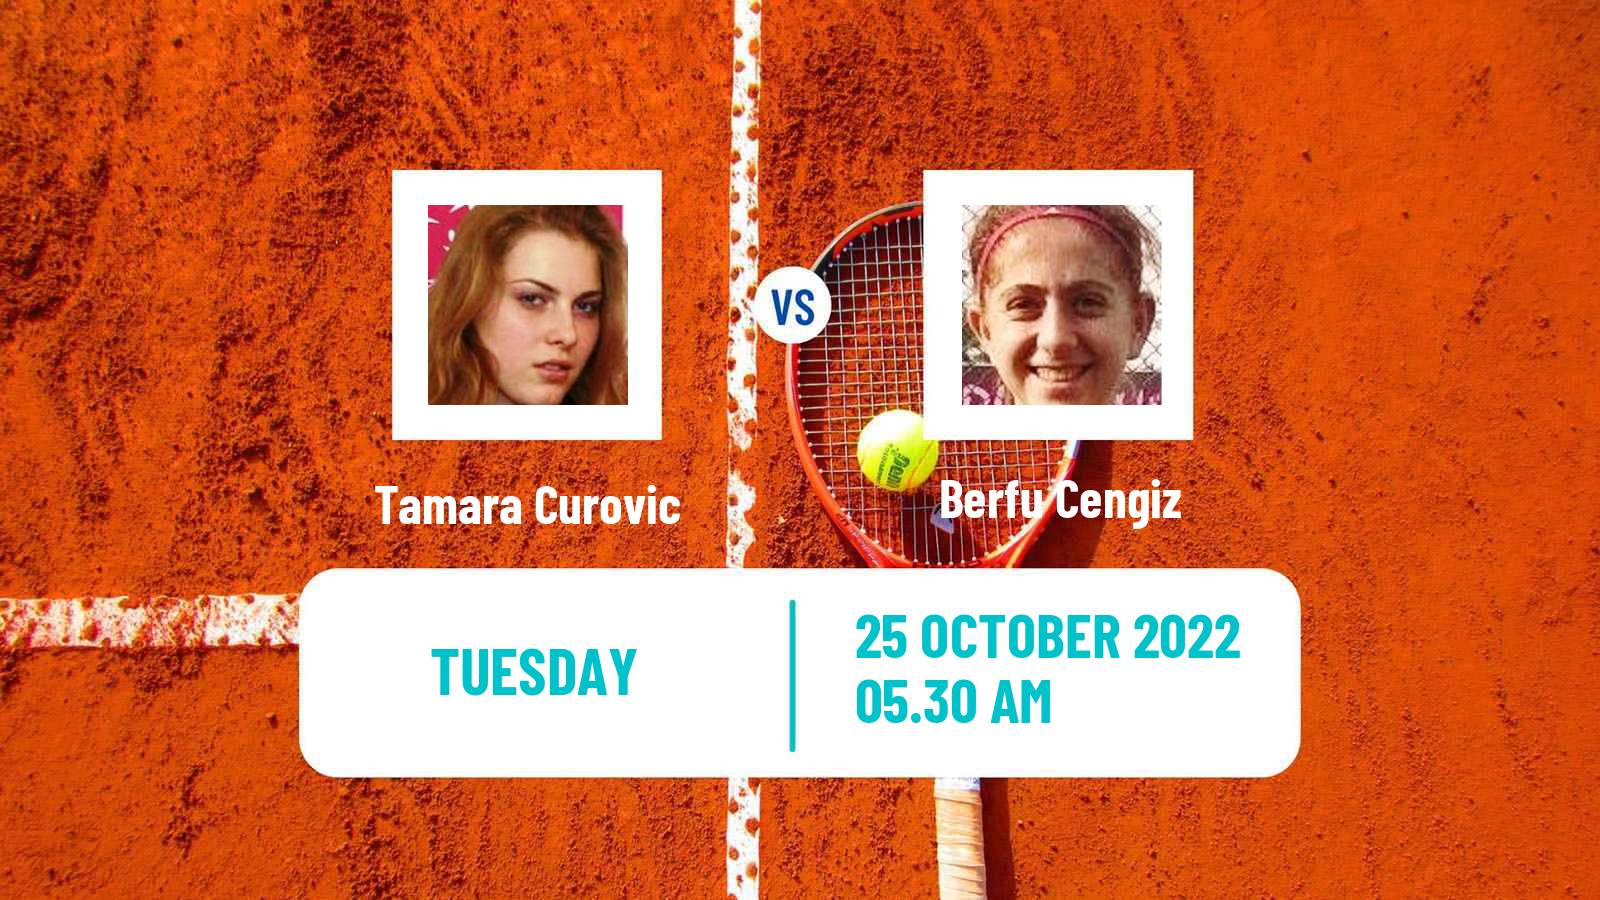 Tennis ITF Tournaments Tamara Curovic - Berfu Cengiz